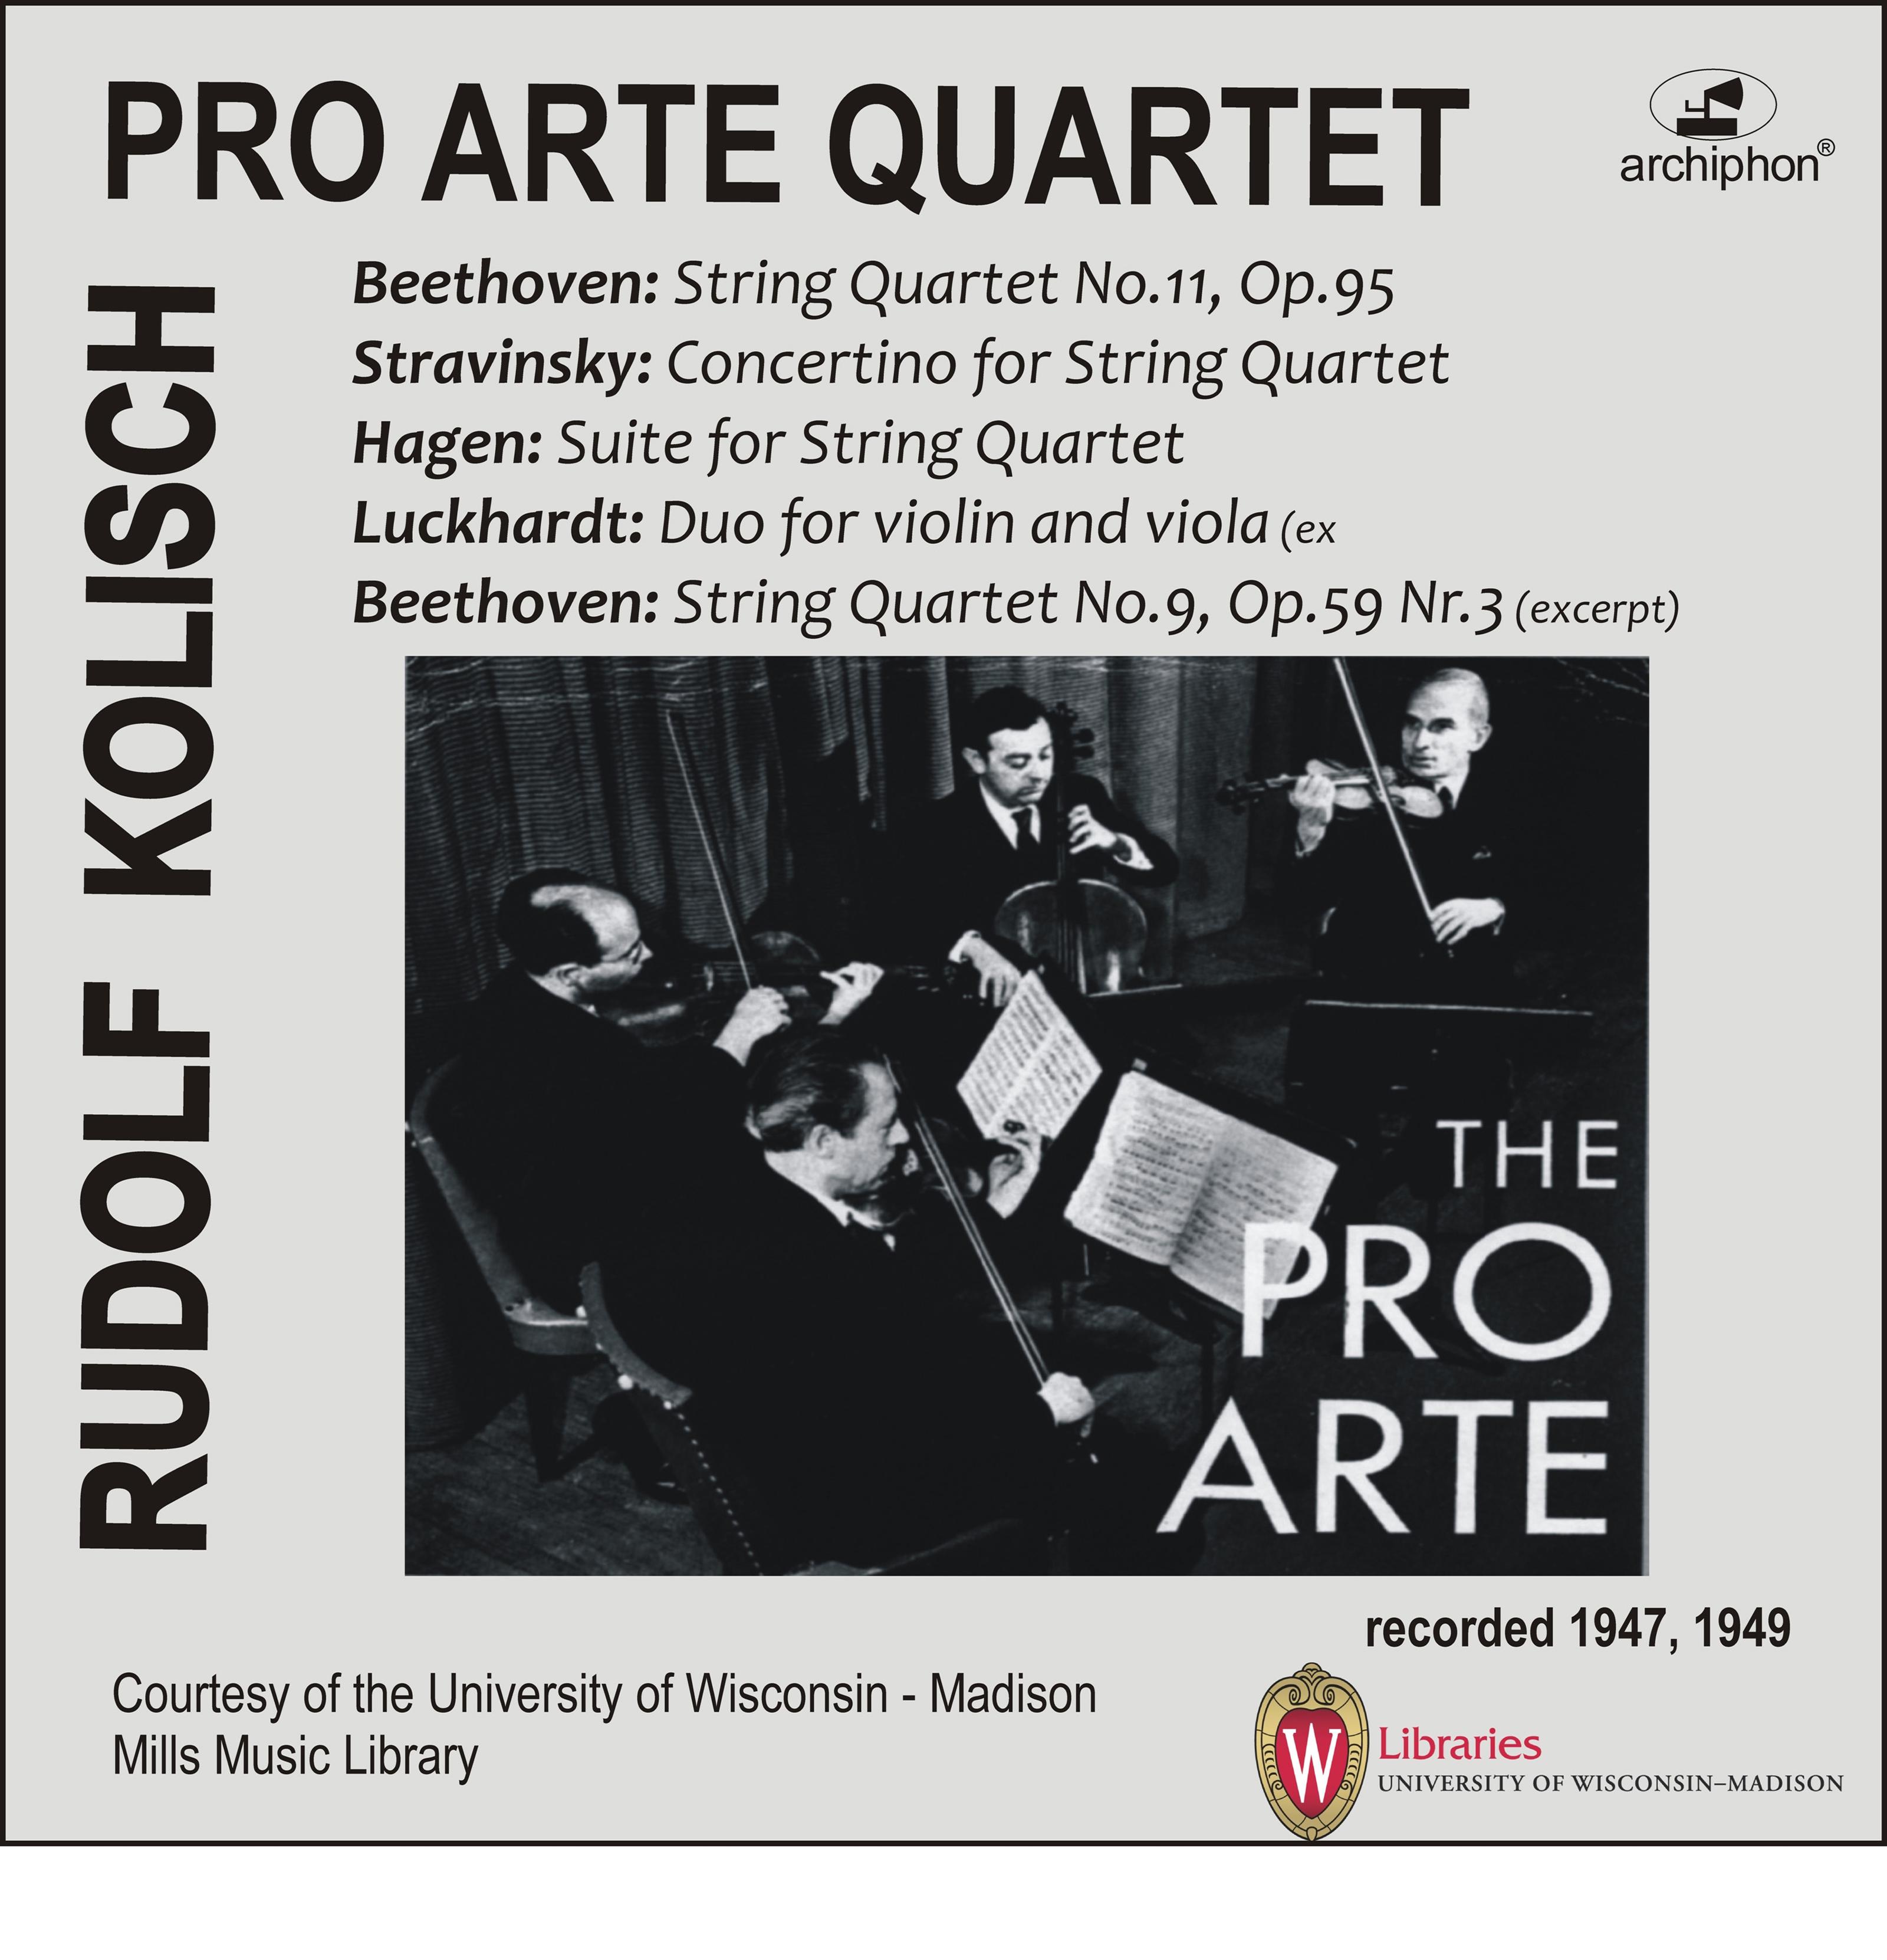 String Quartet No. 9 in C Major, Op. 59 No. 3 "Razumovsky": I. Introduzione. Andante con moto - Allegro vivace